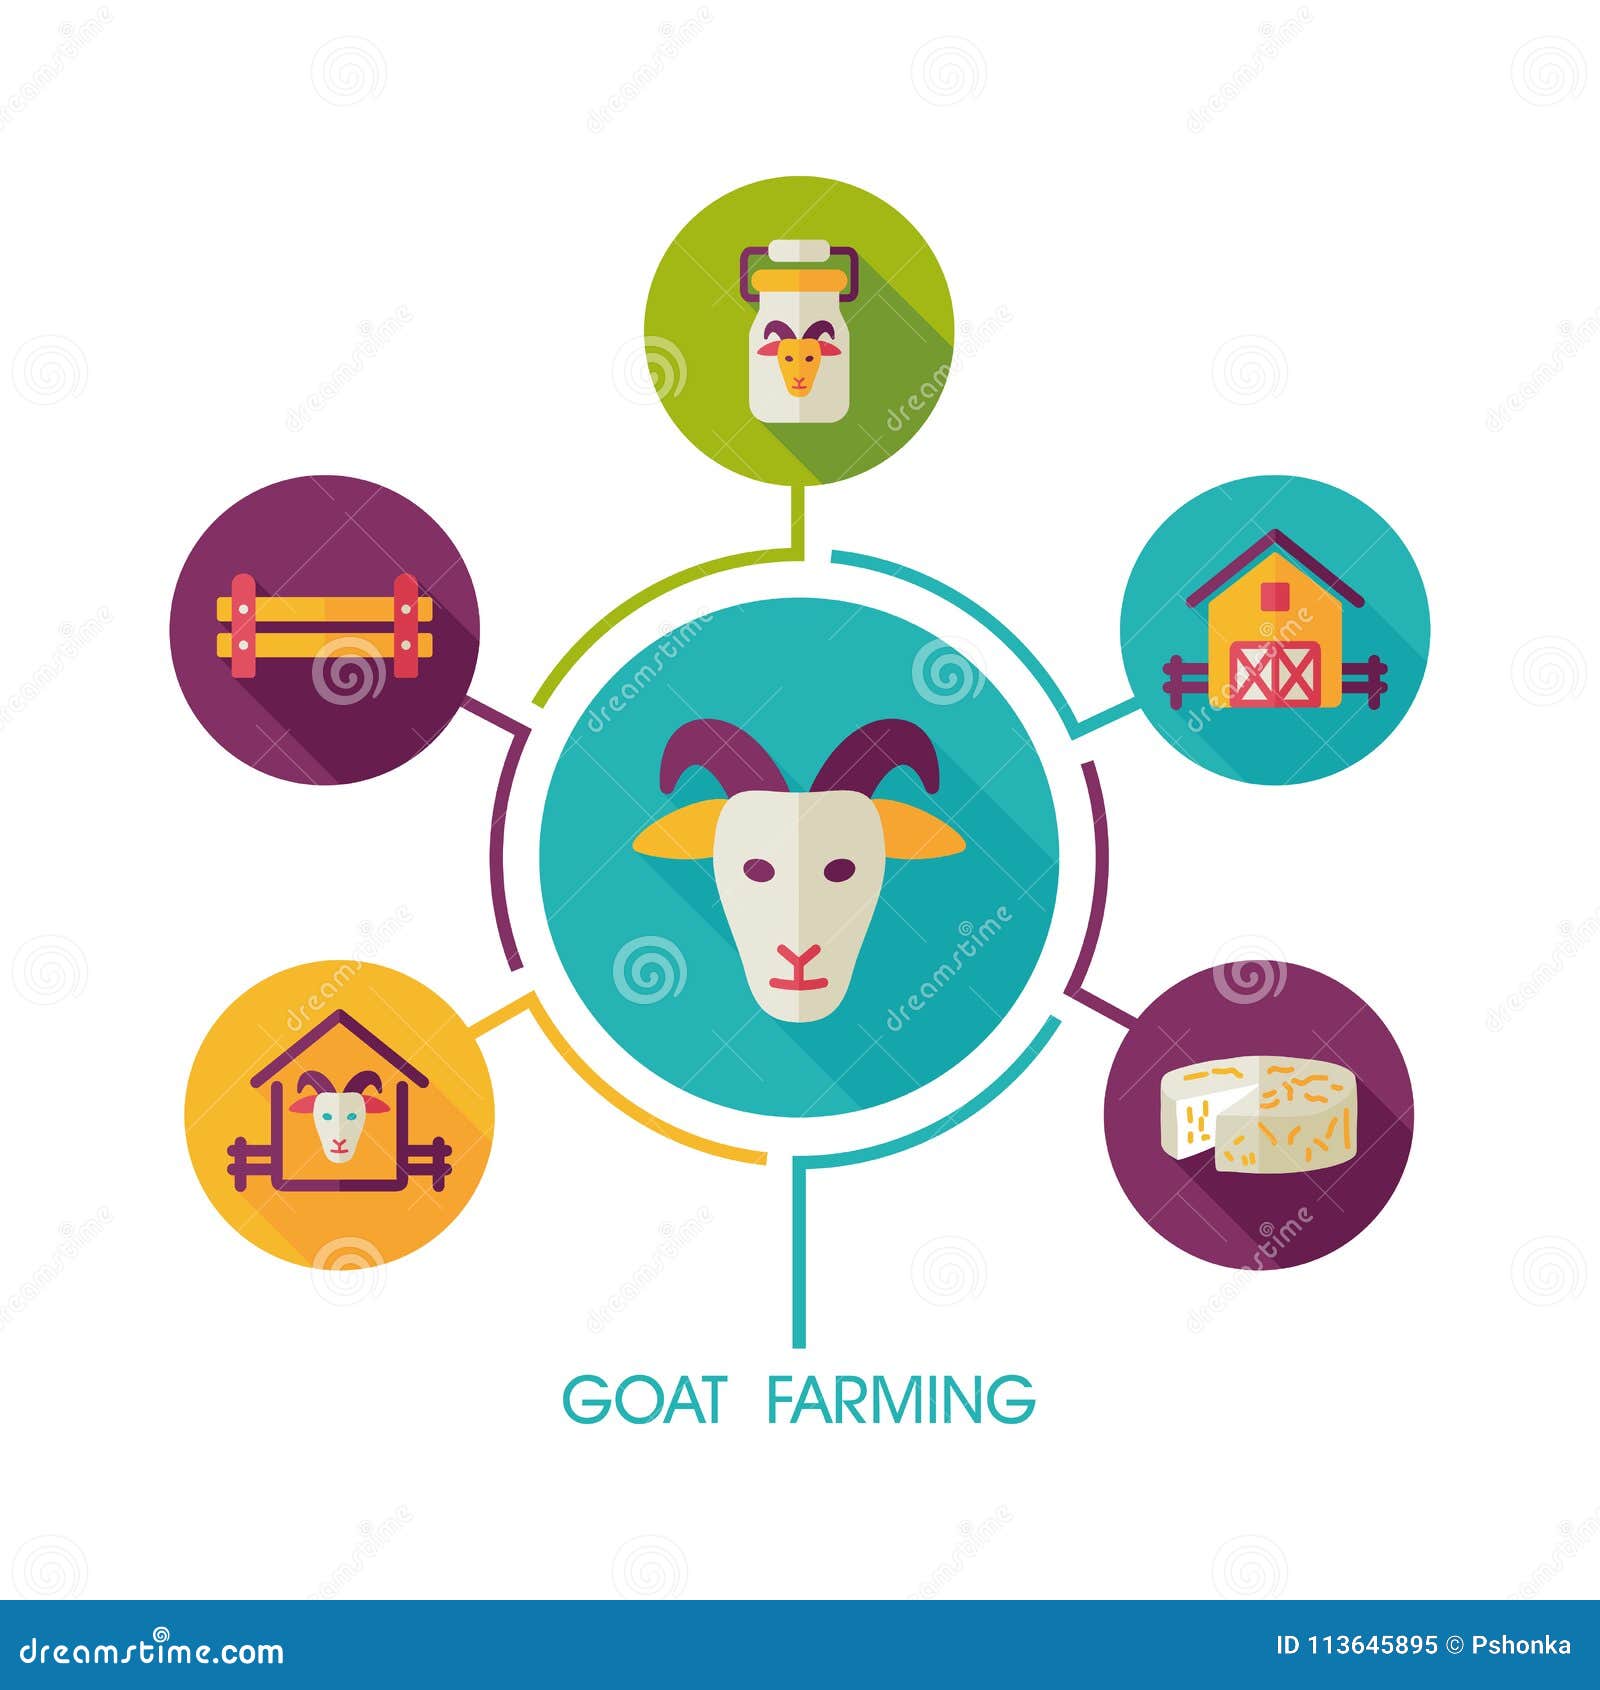 goat farming app